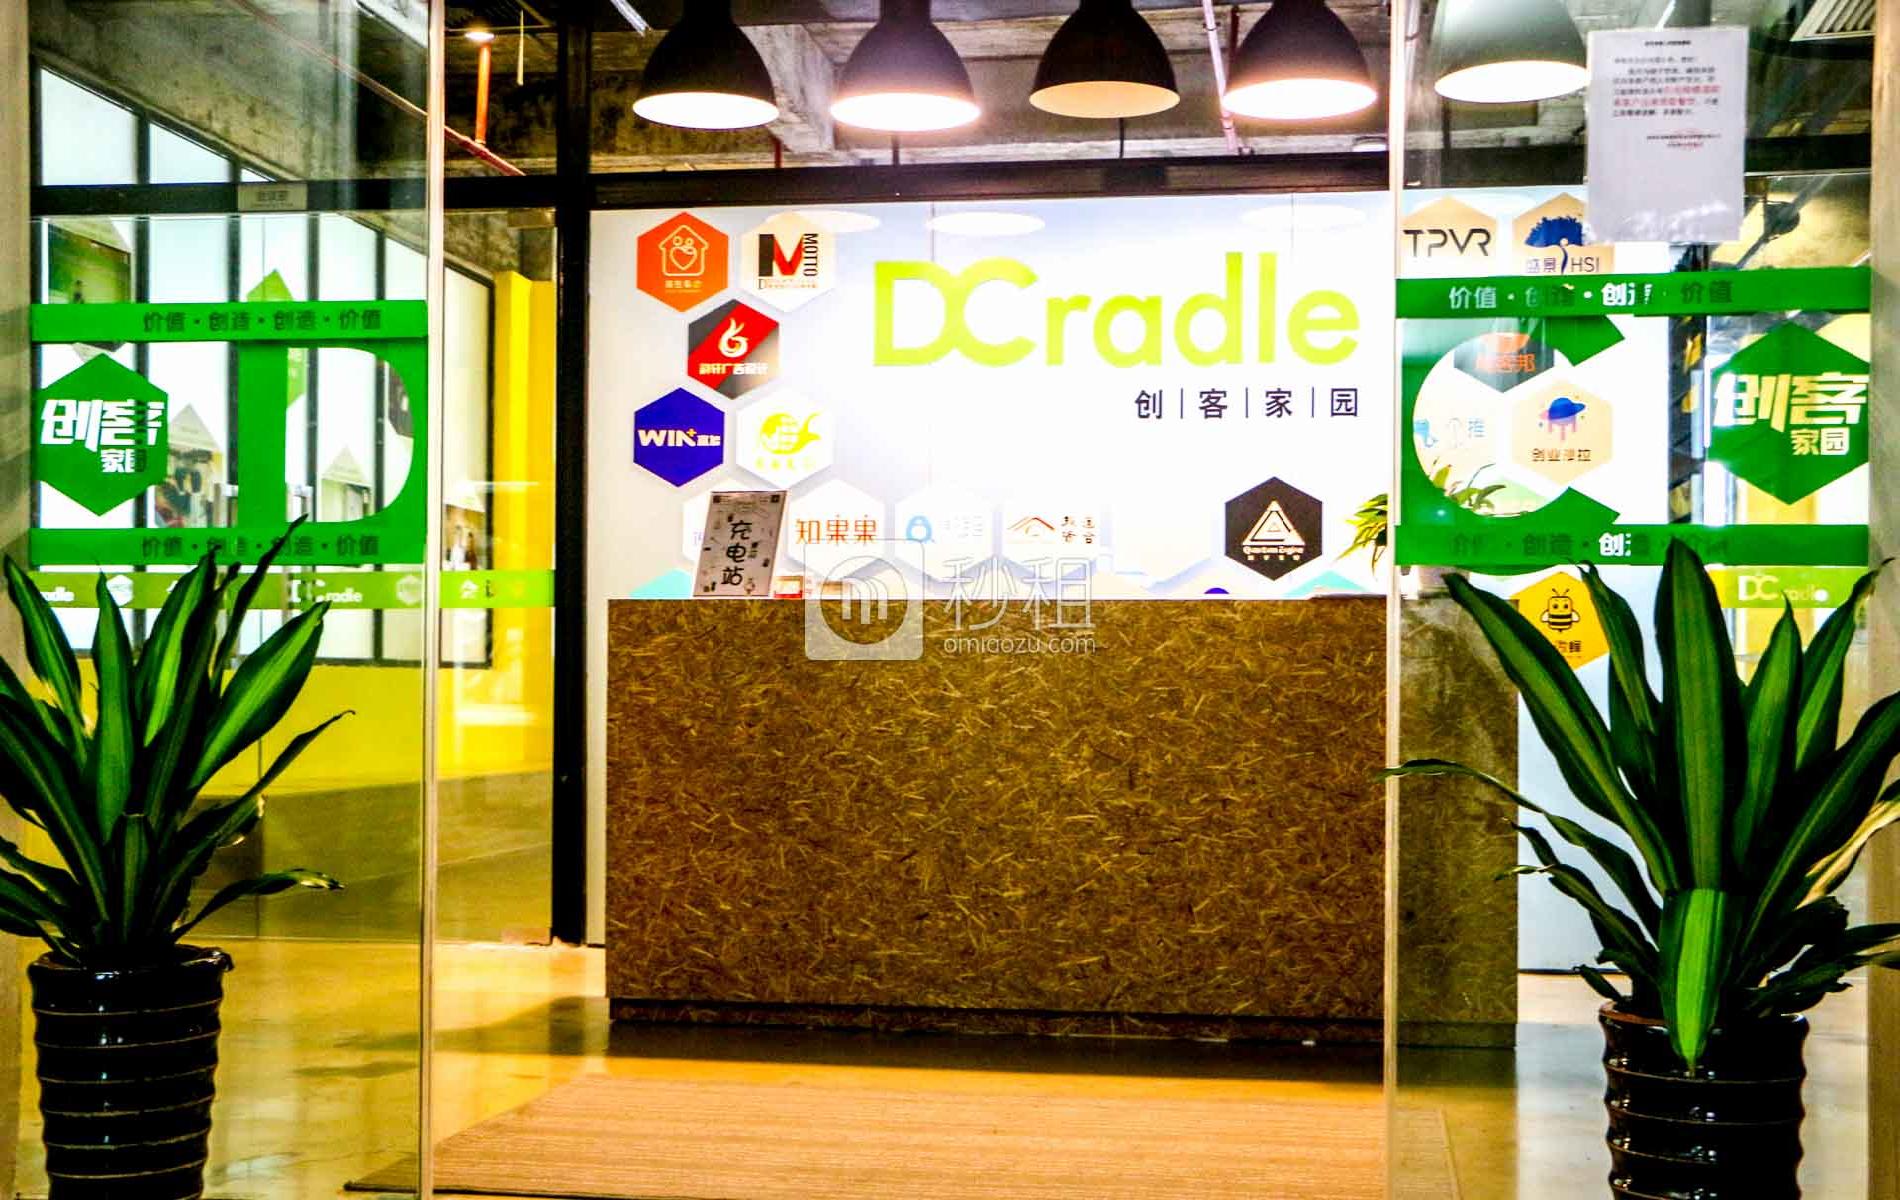   DCradle创客家园-珠江国际中心